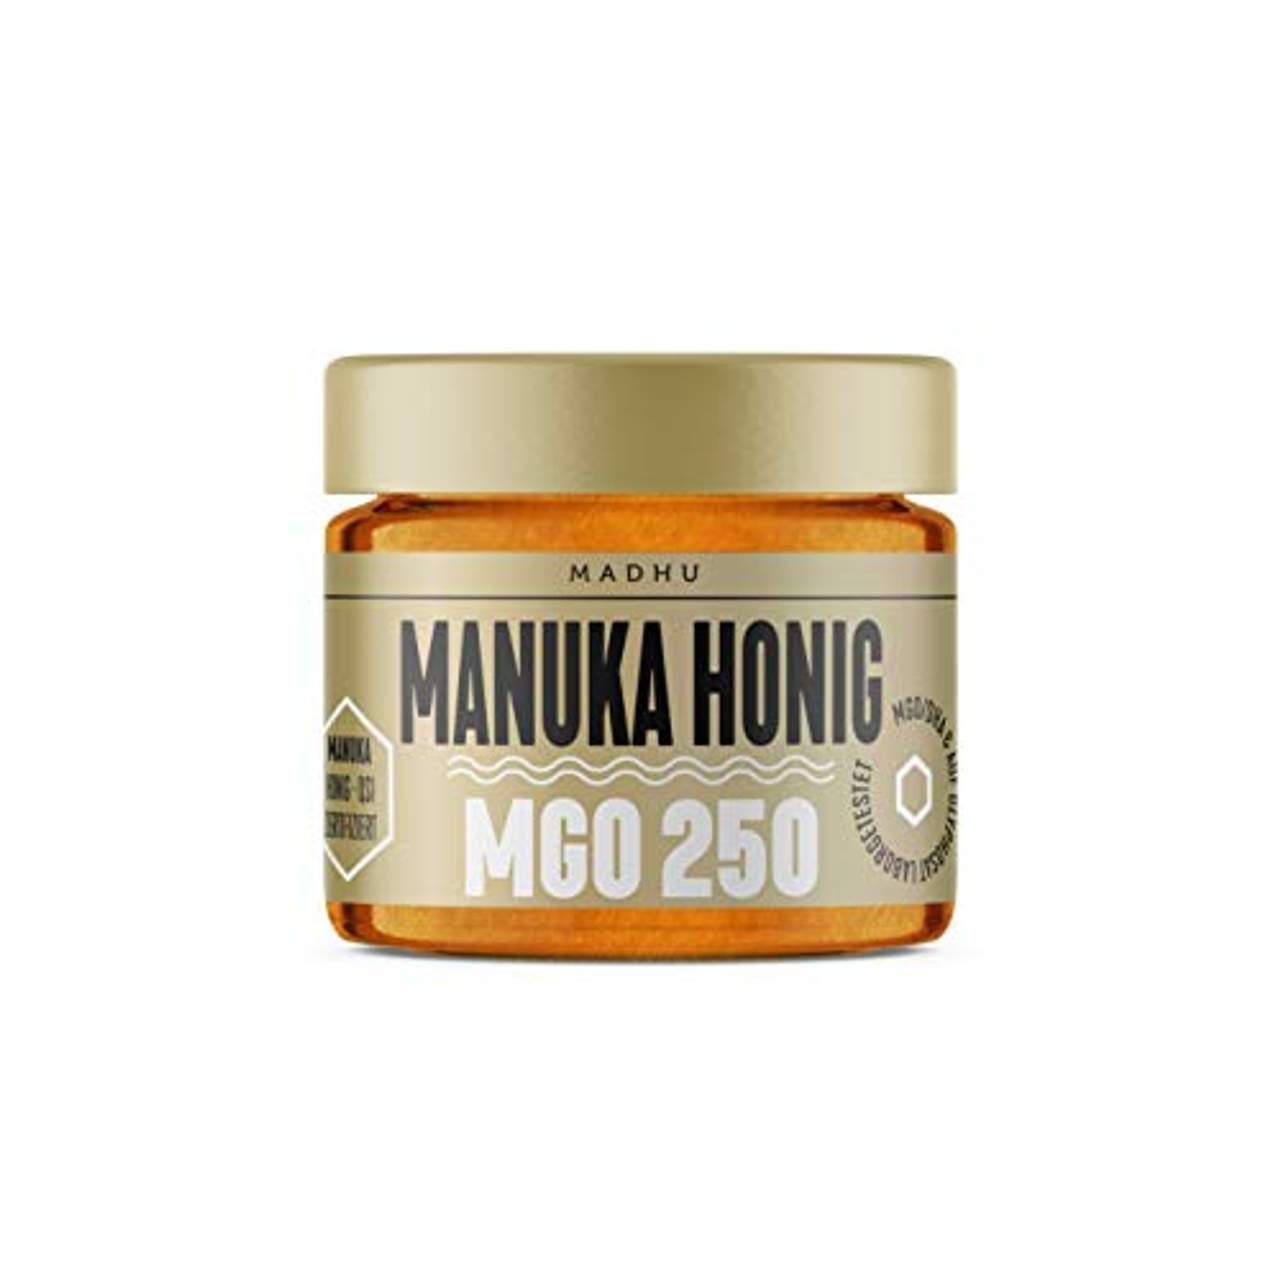 Madhu PureRawHoney Manuka Honig 250+ MGO 